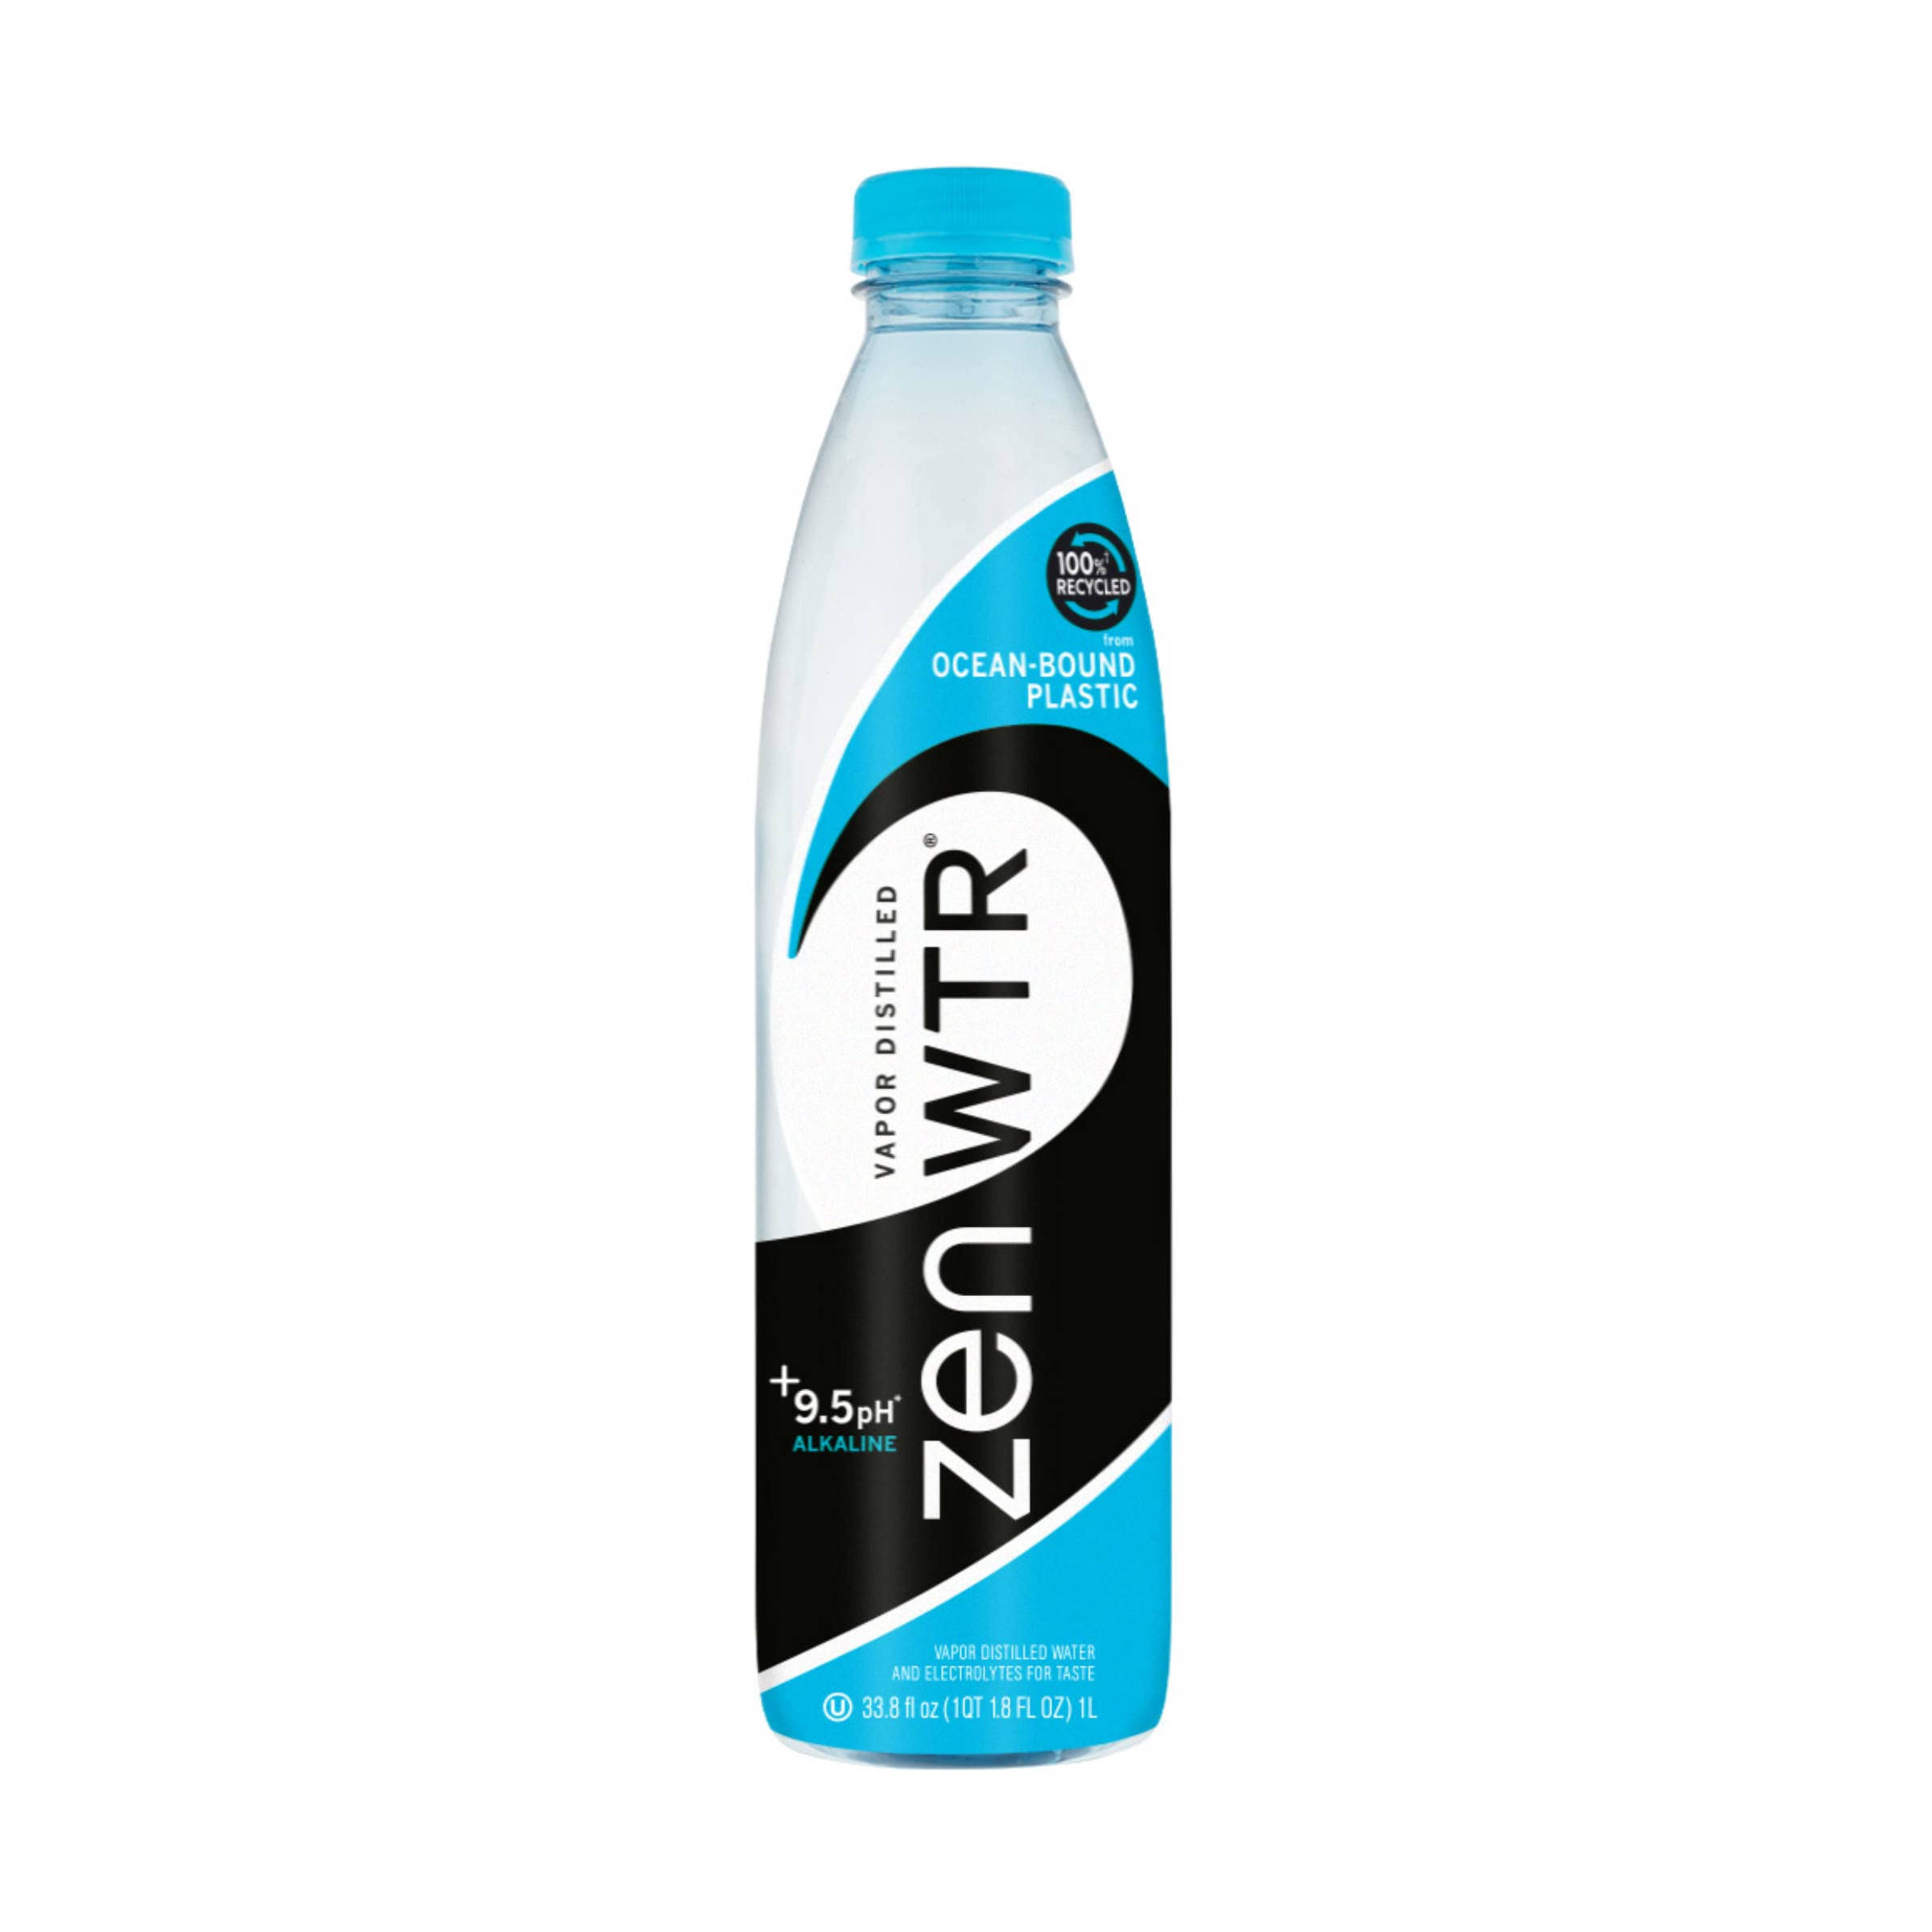 Zen Water - Water Vapro Distill 9.5ph - Case of 12-33.8 FZ